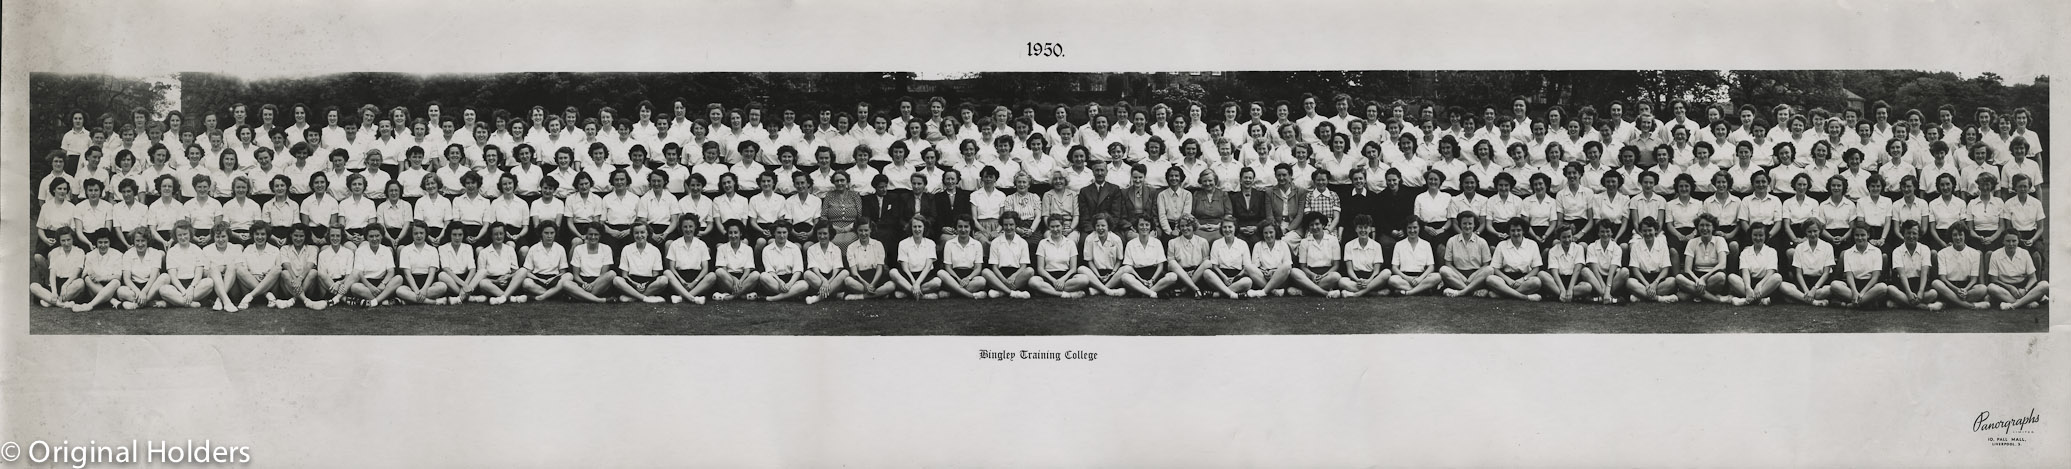 Bingley Training College 1950